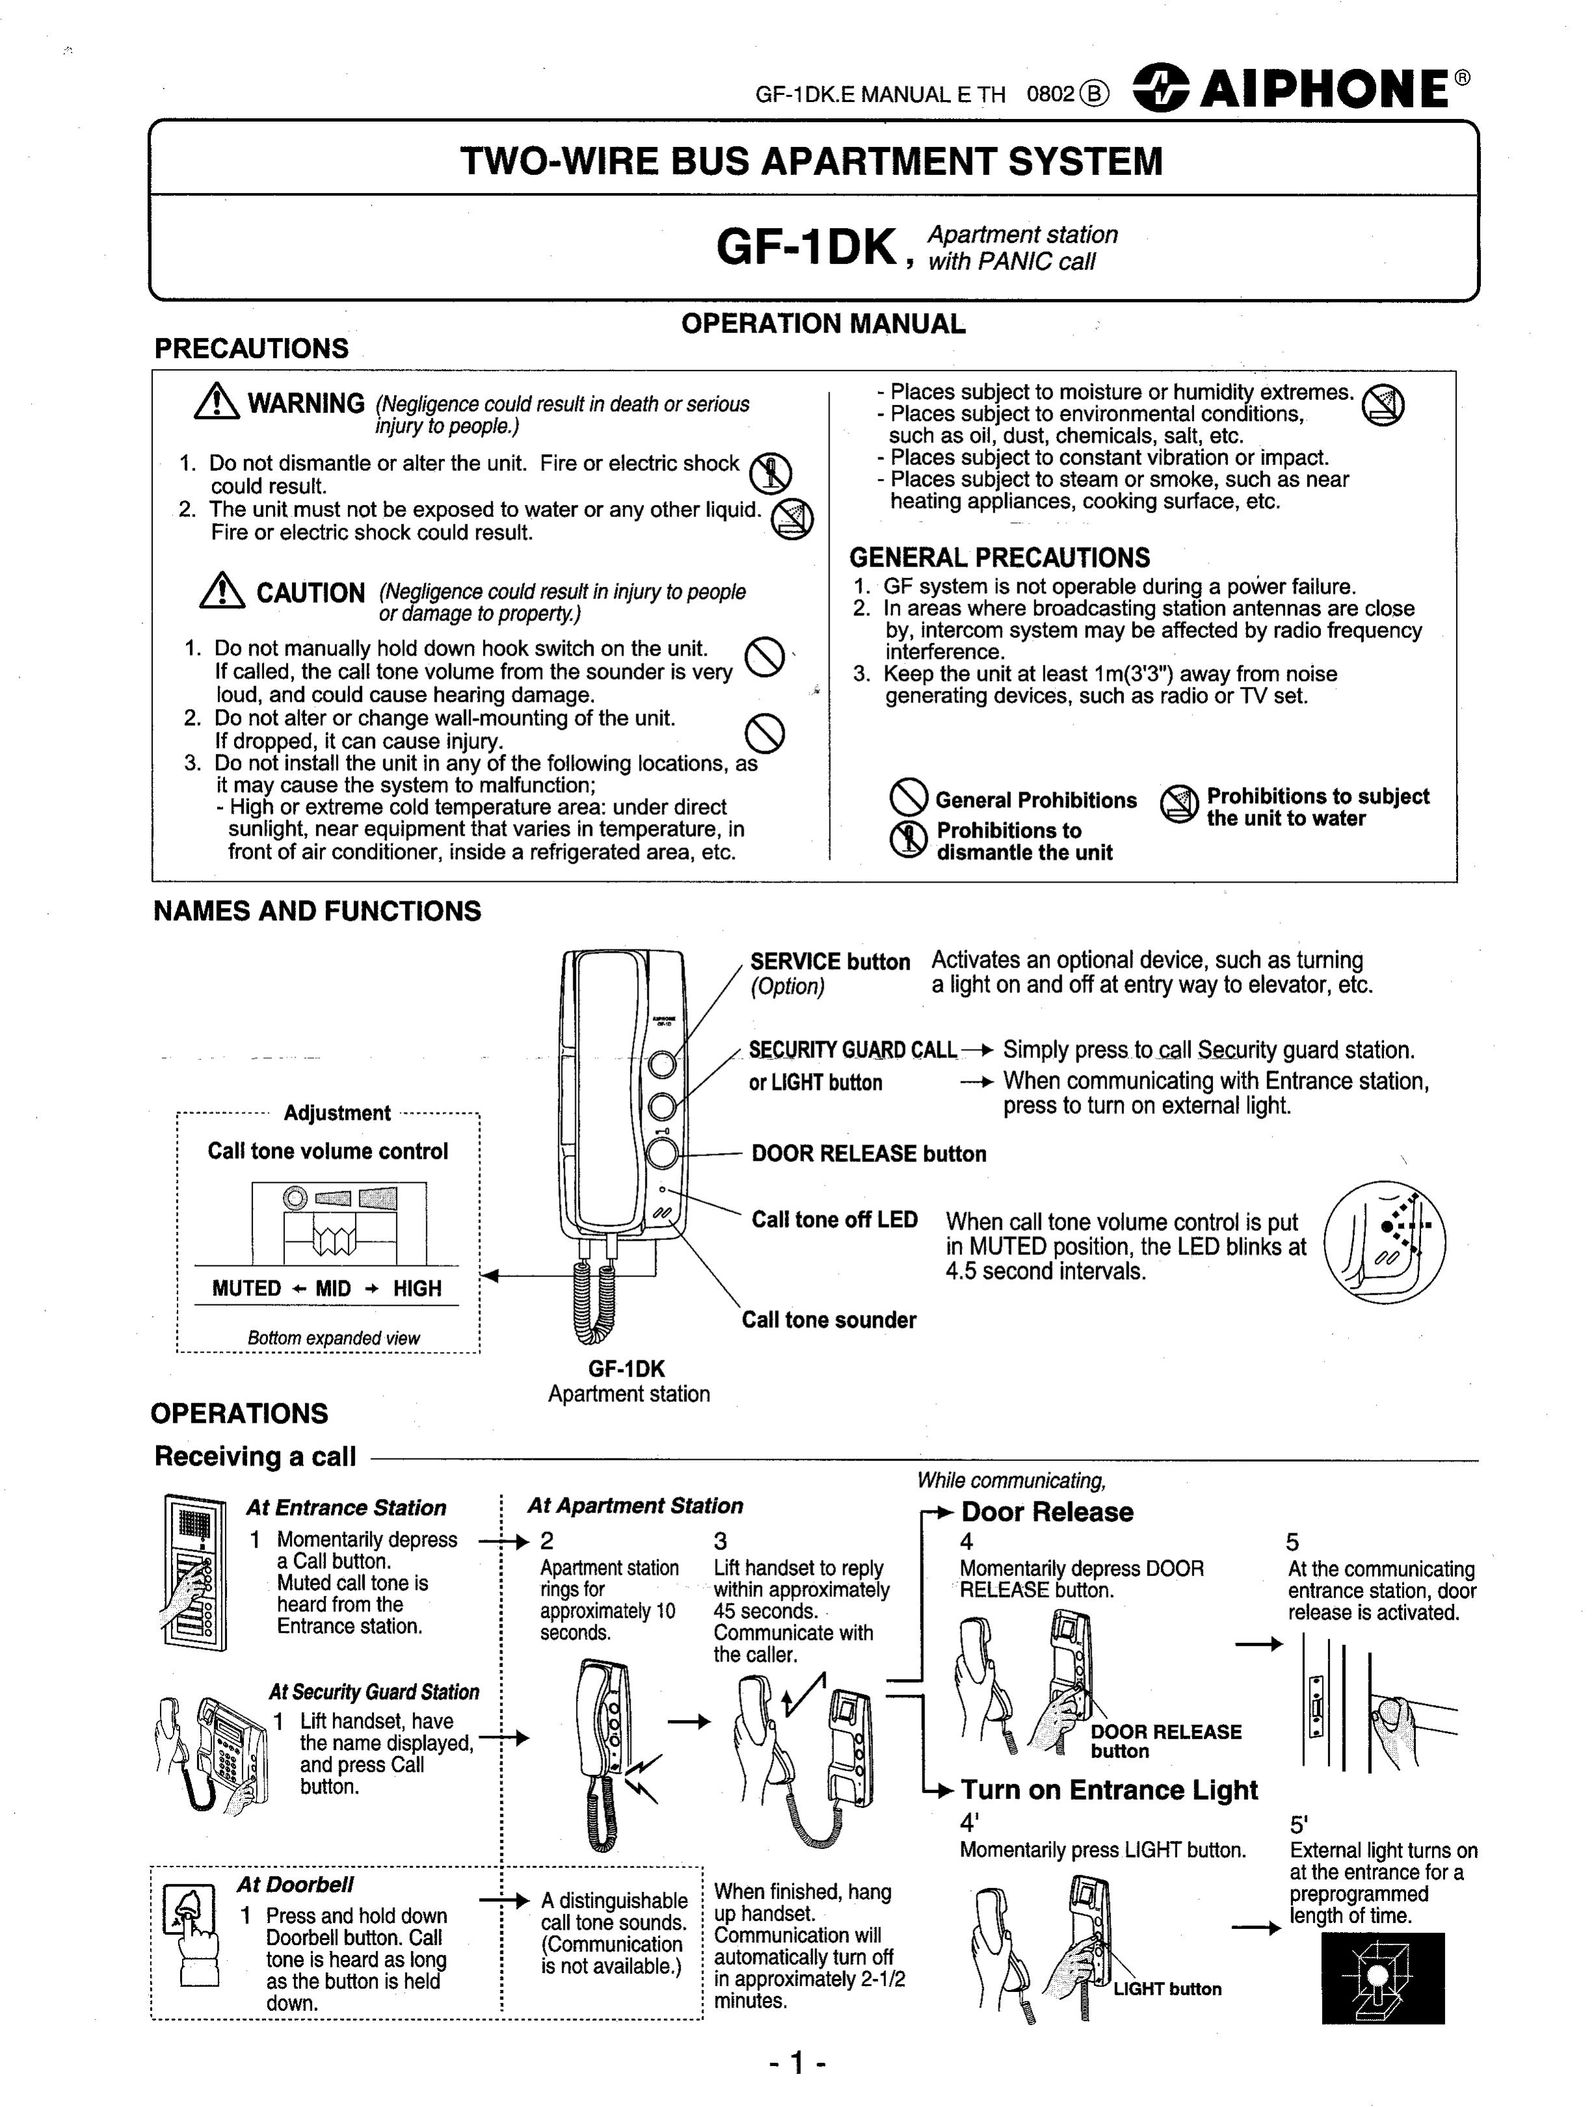 Aiphone GF-1DK Telephone User Manual